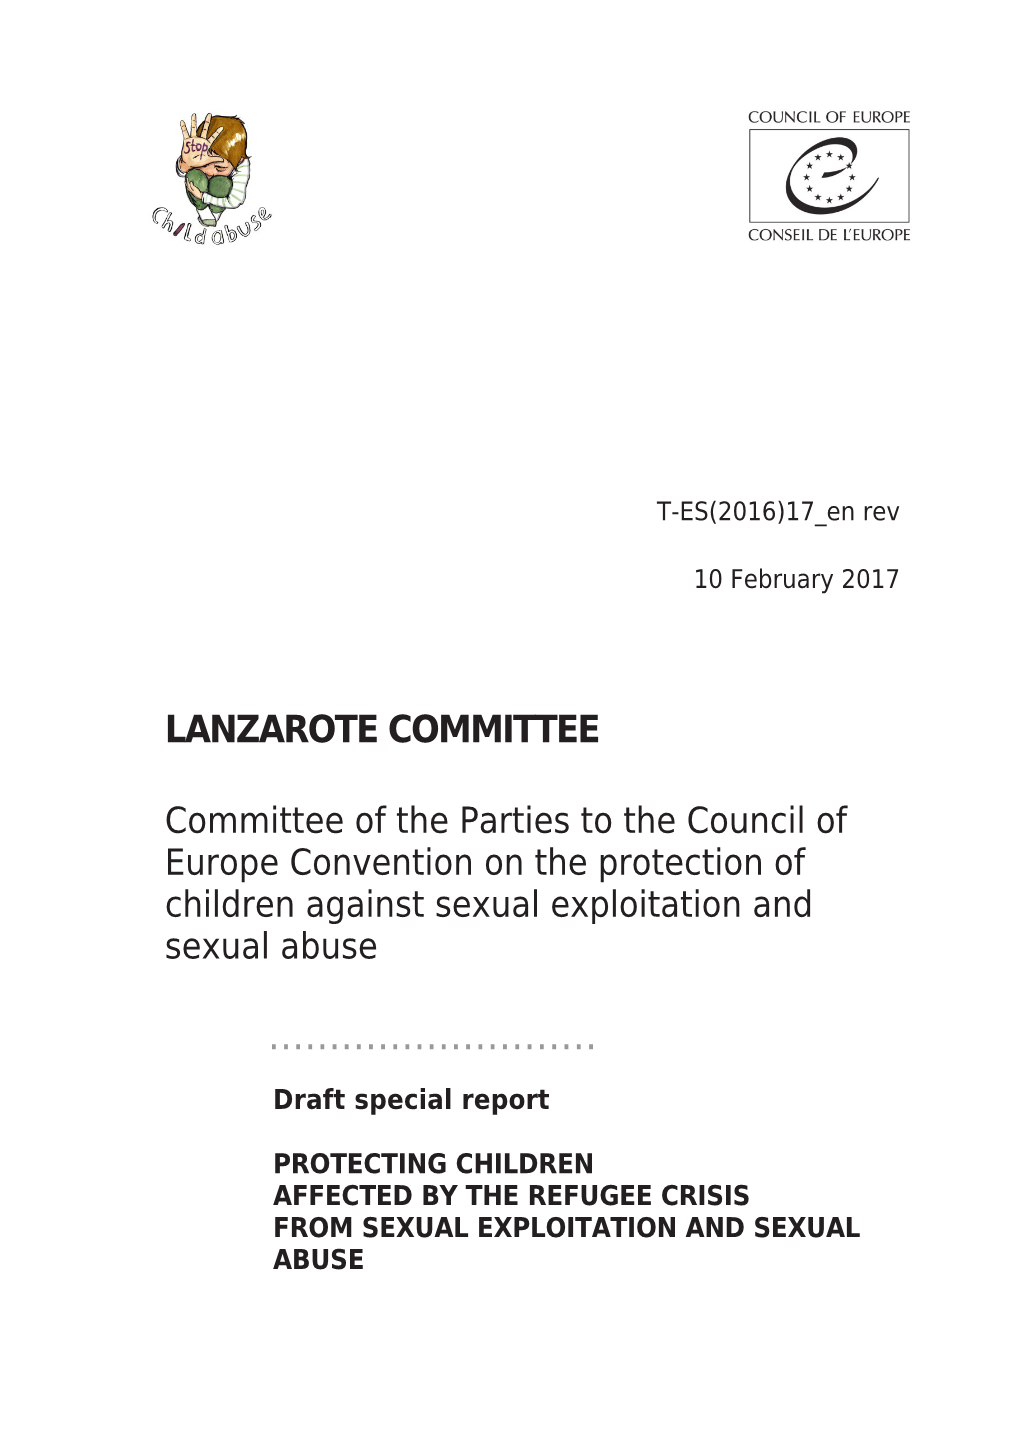 Lanzarote Committee